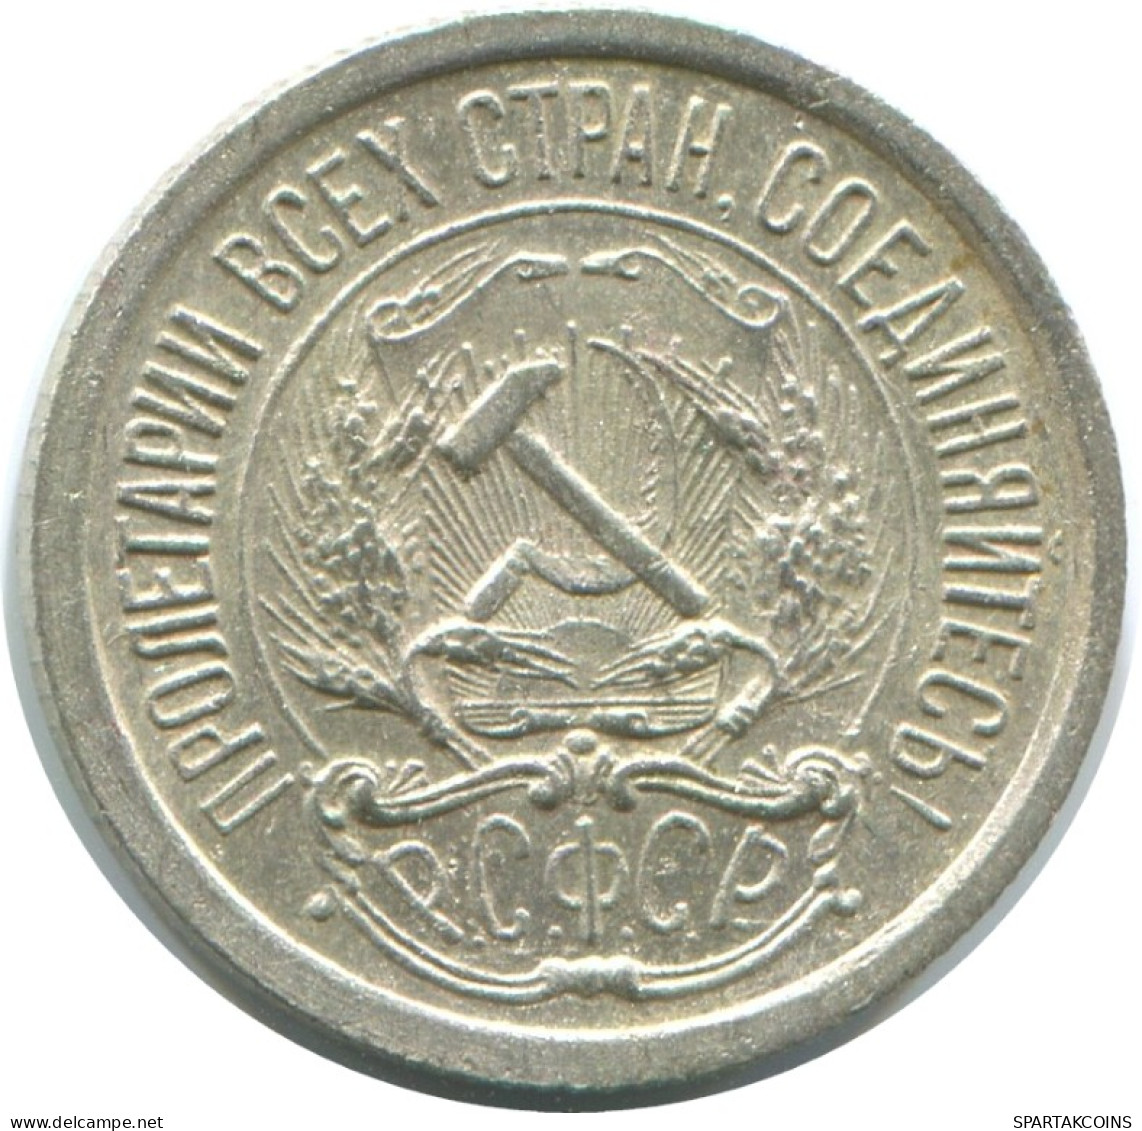 10 KOPEKS 1923 RUSSIA RSFSR SILVER Coin HIGH GRADE #AE918.4.U.A - Russie